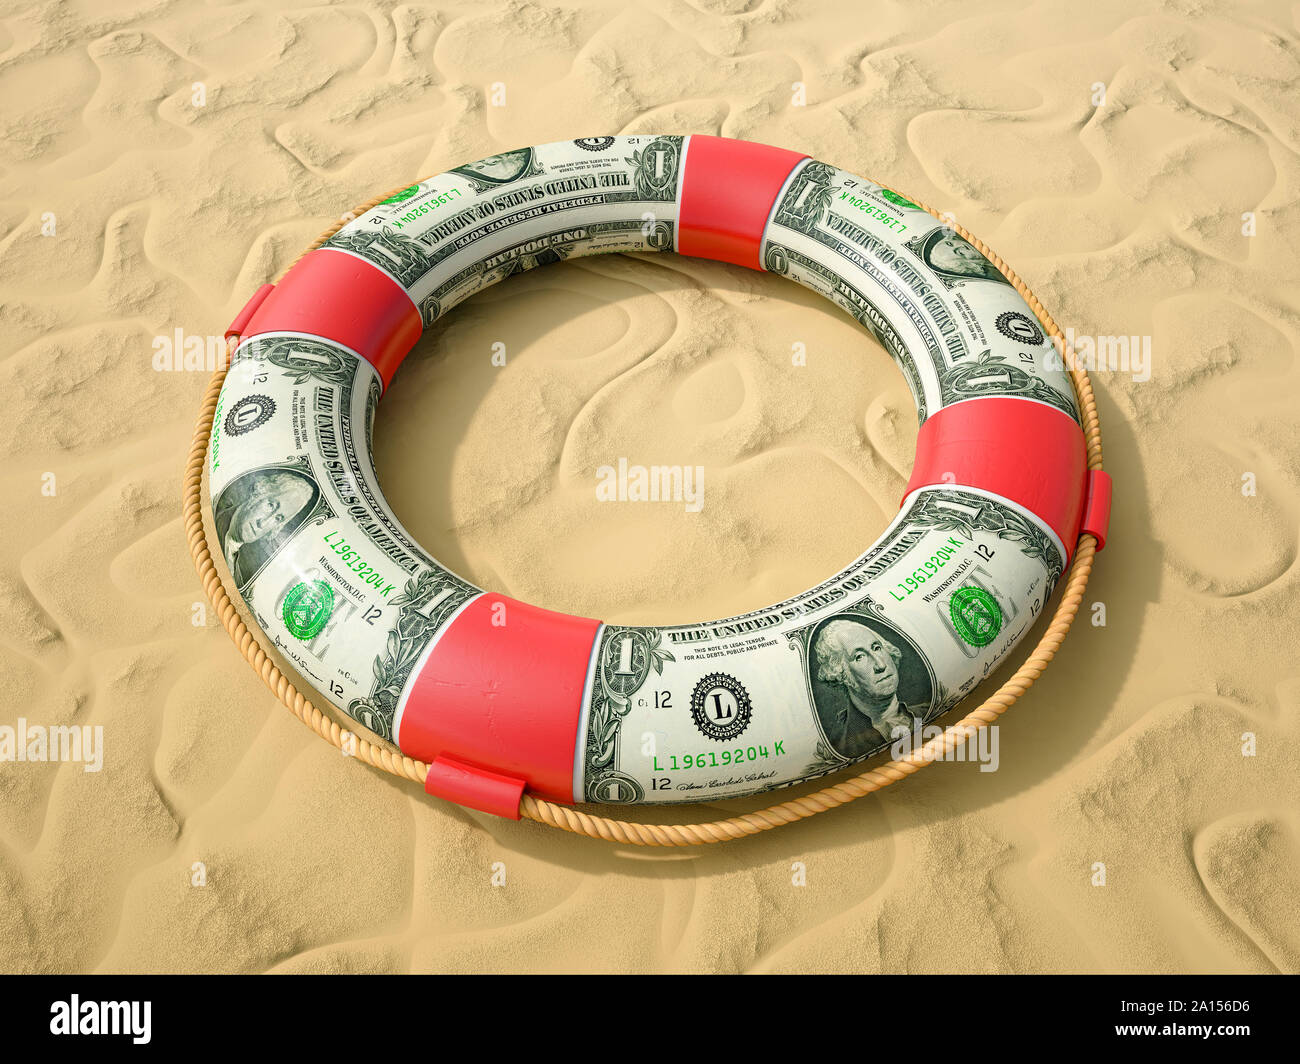 Anillo de vida Lifebelt preserver hechas de billetes de dólares sobre arena. Foto de stock